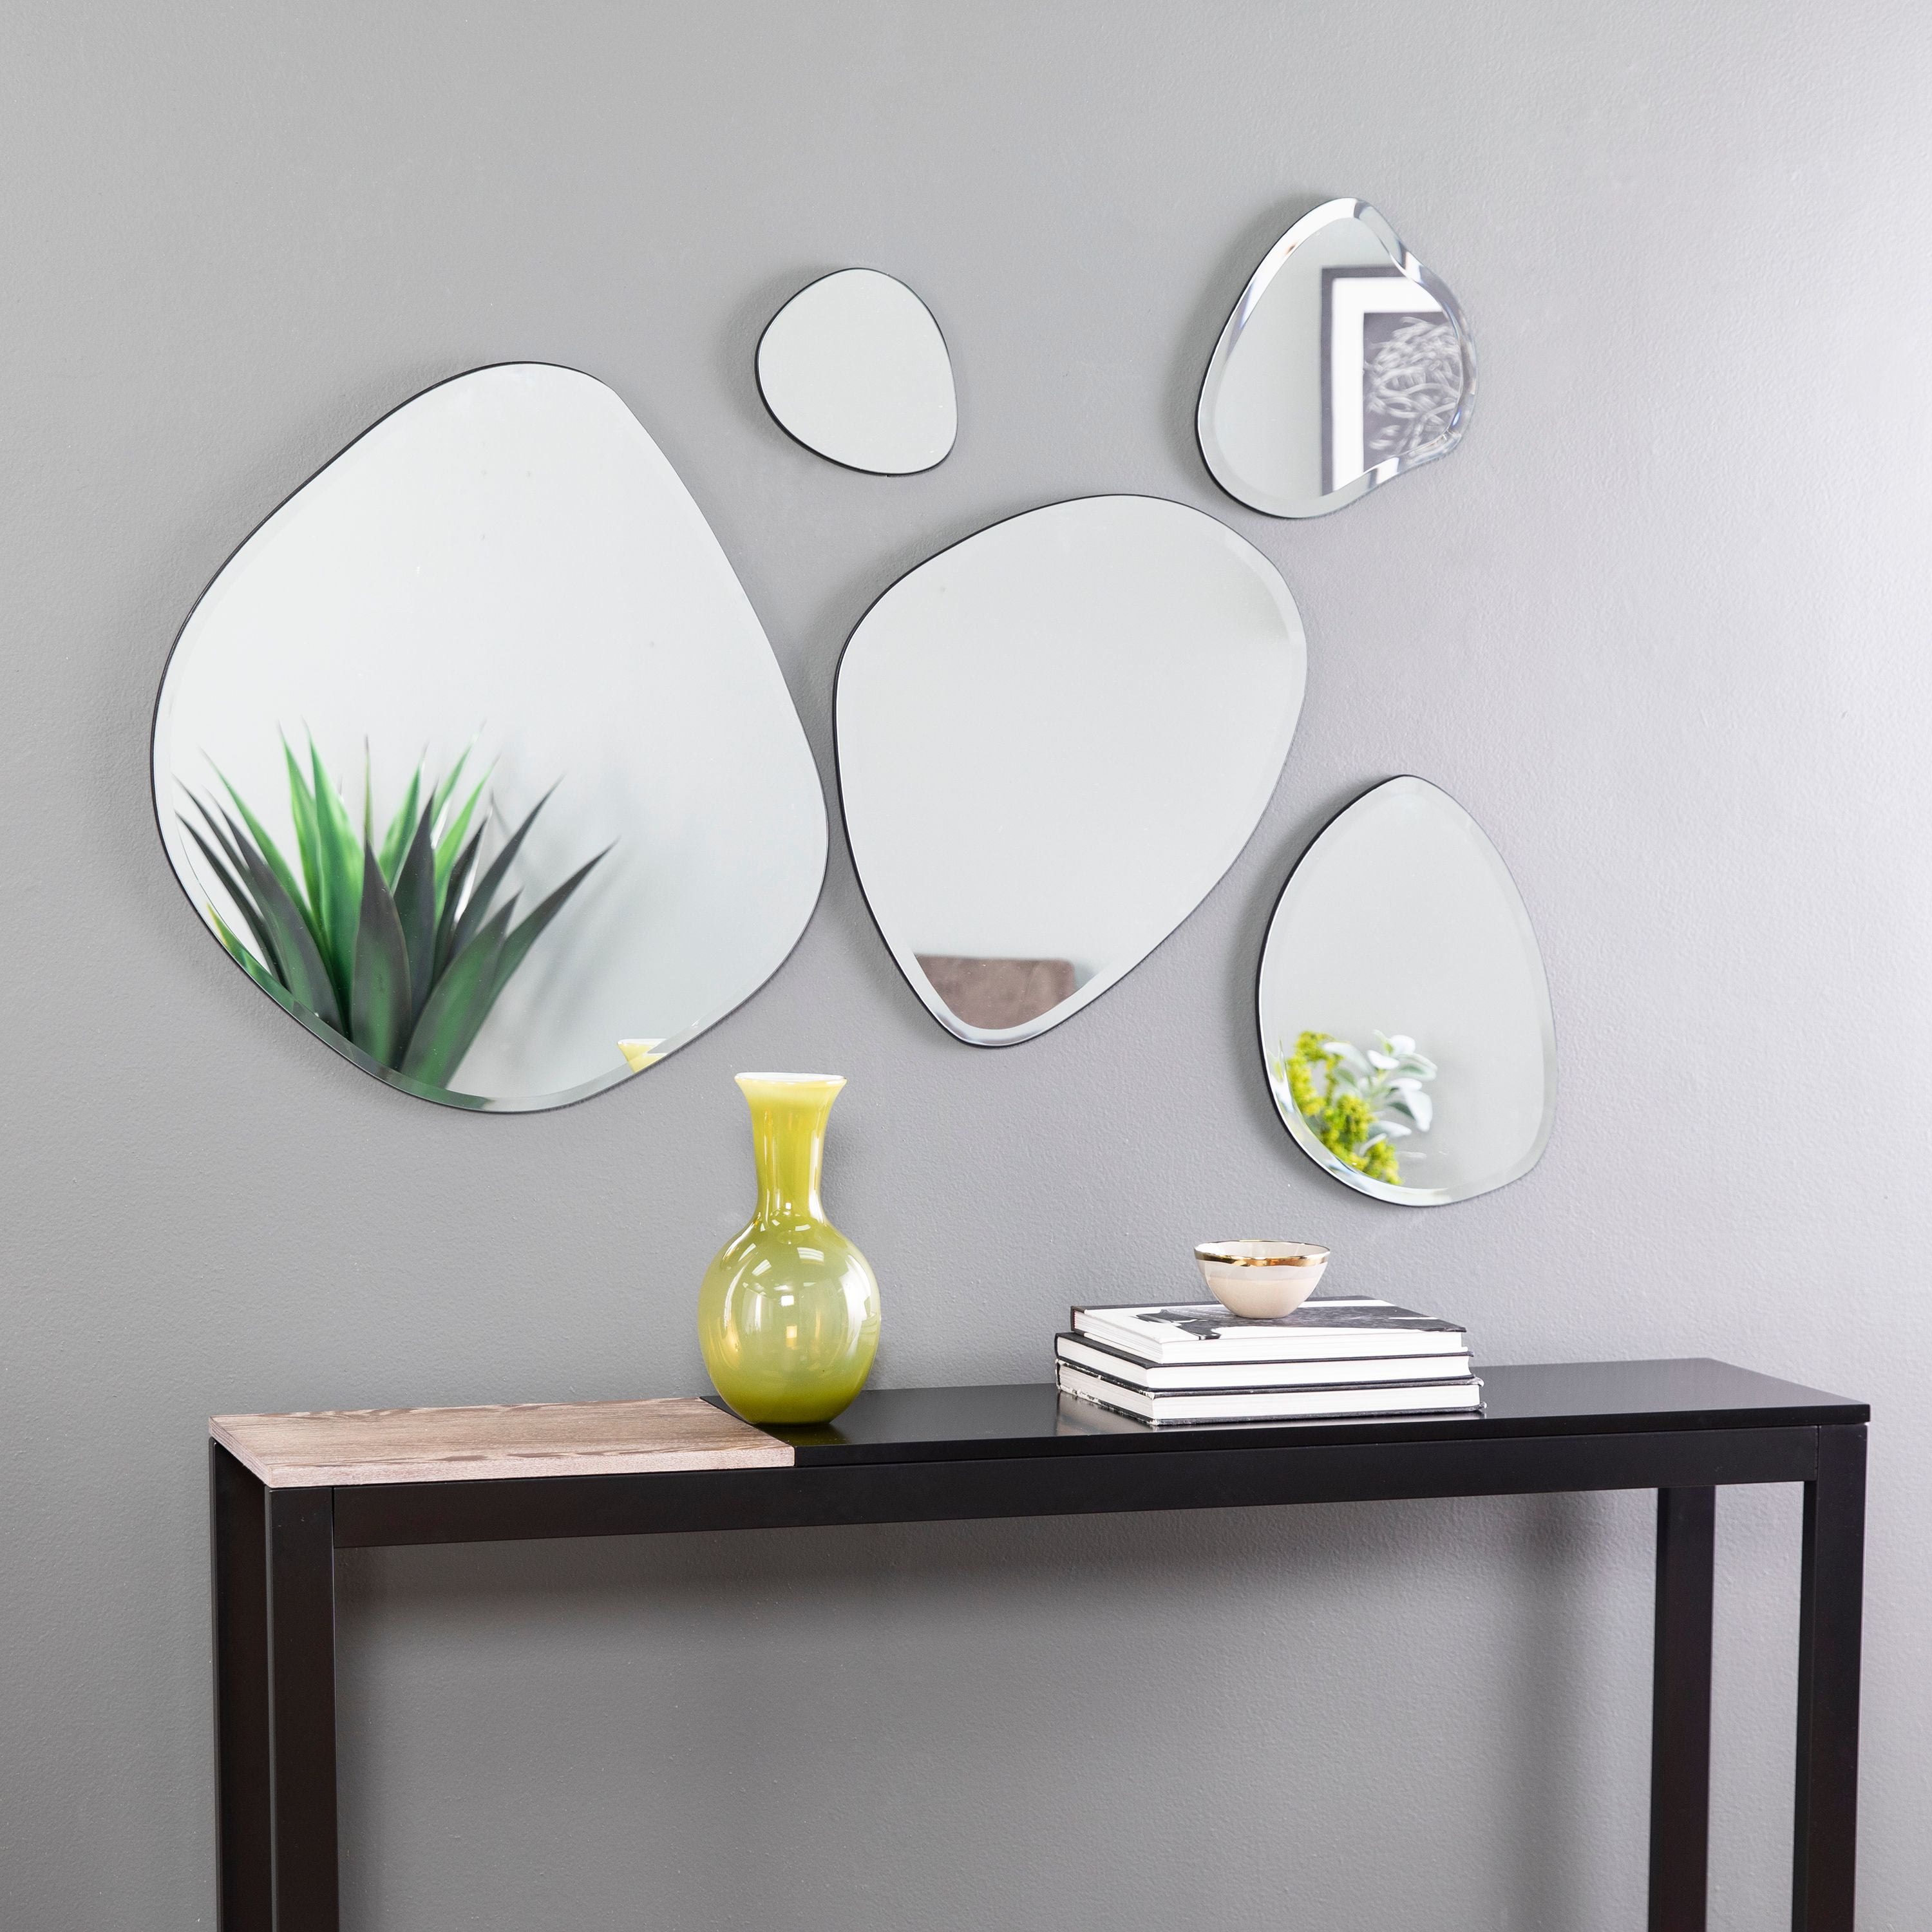 Estelle Glam 5pc Decorative Mirror Set, Pebble Shaped - Walmart.com ...